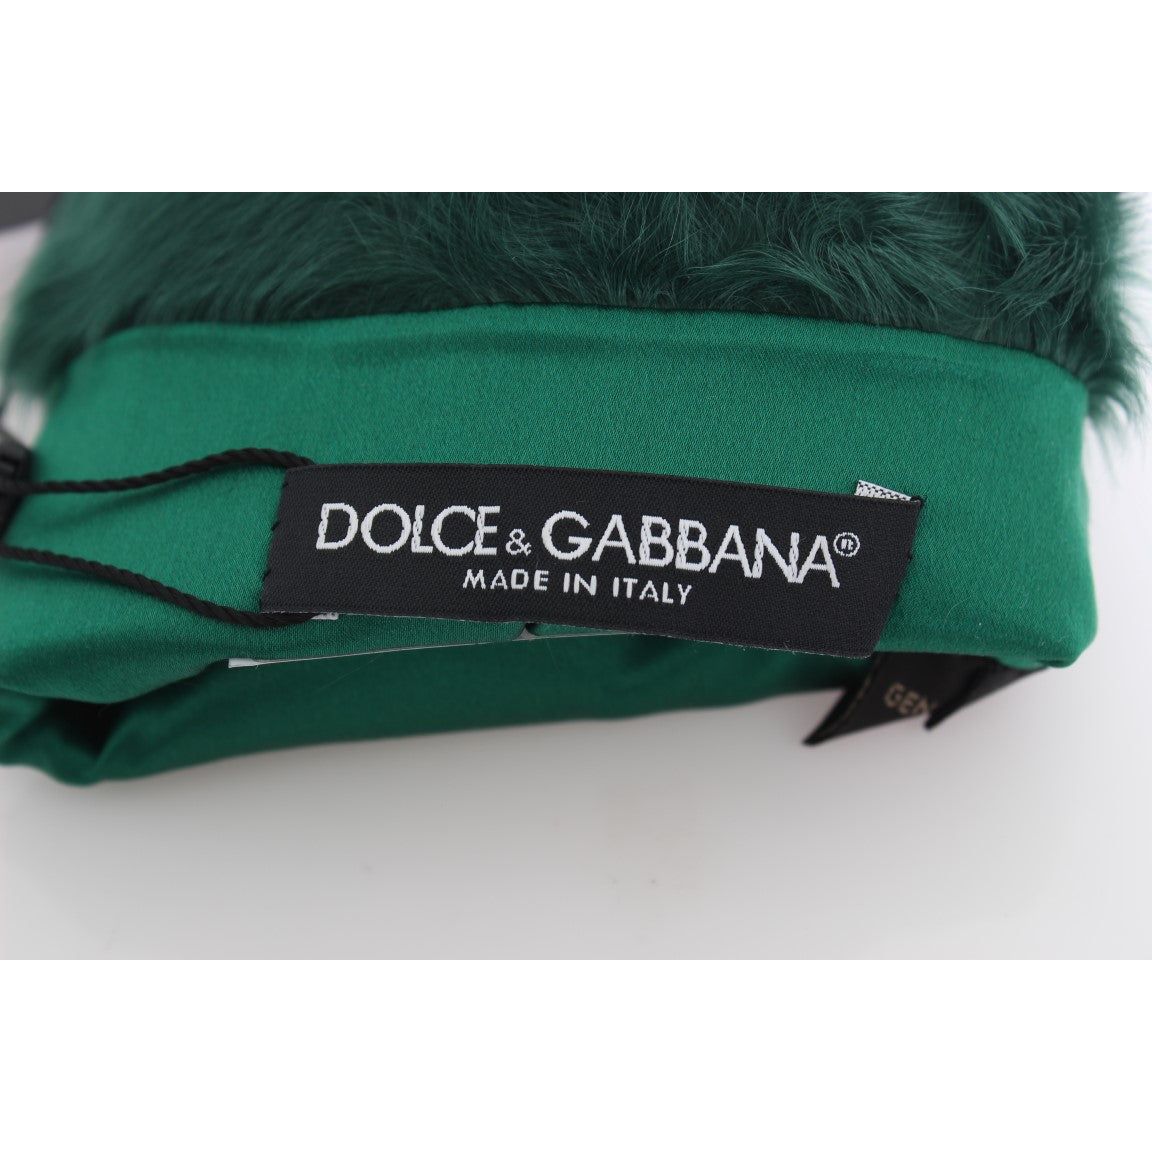 Dolce & Gabbana Elegant Elbow-Length Leather Gloves green-leather-xiangao-fur-elbow-gloves 332608-green-leather-xiangao-fur-elbow-gloves-4.jpg